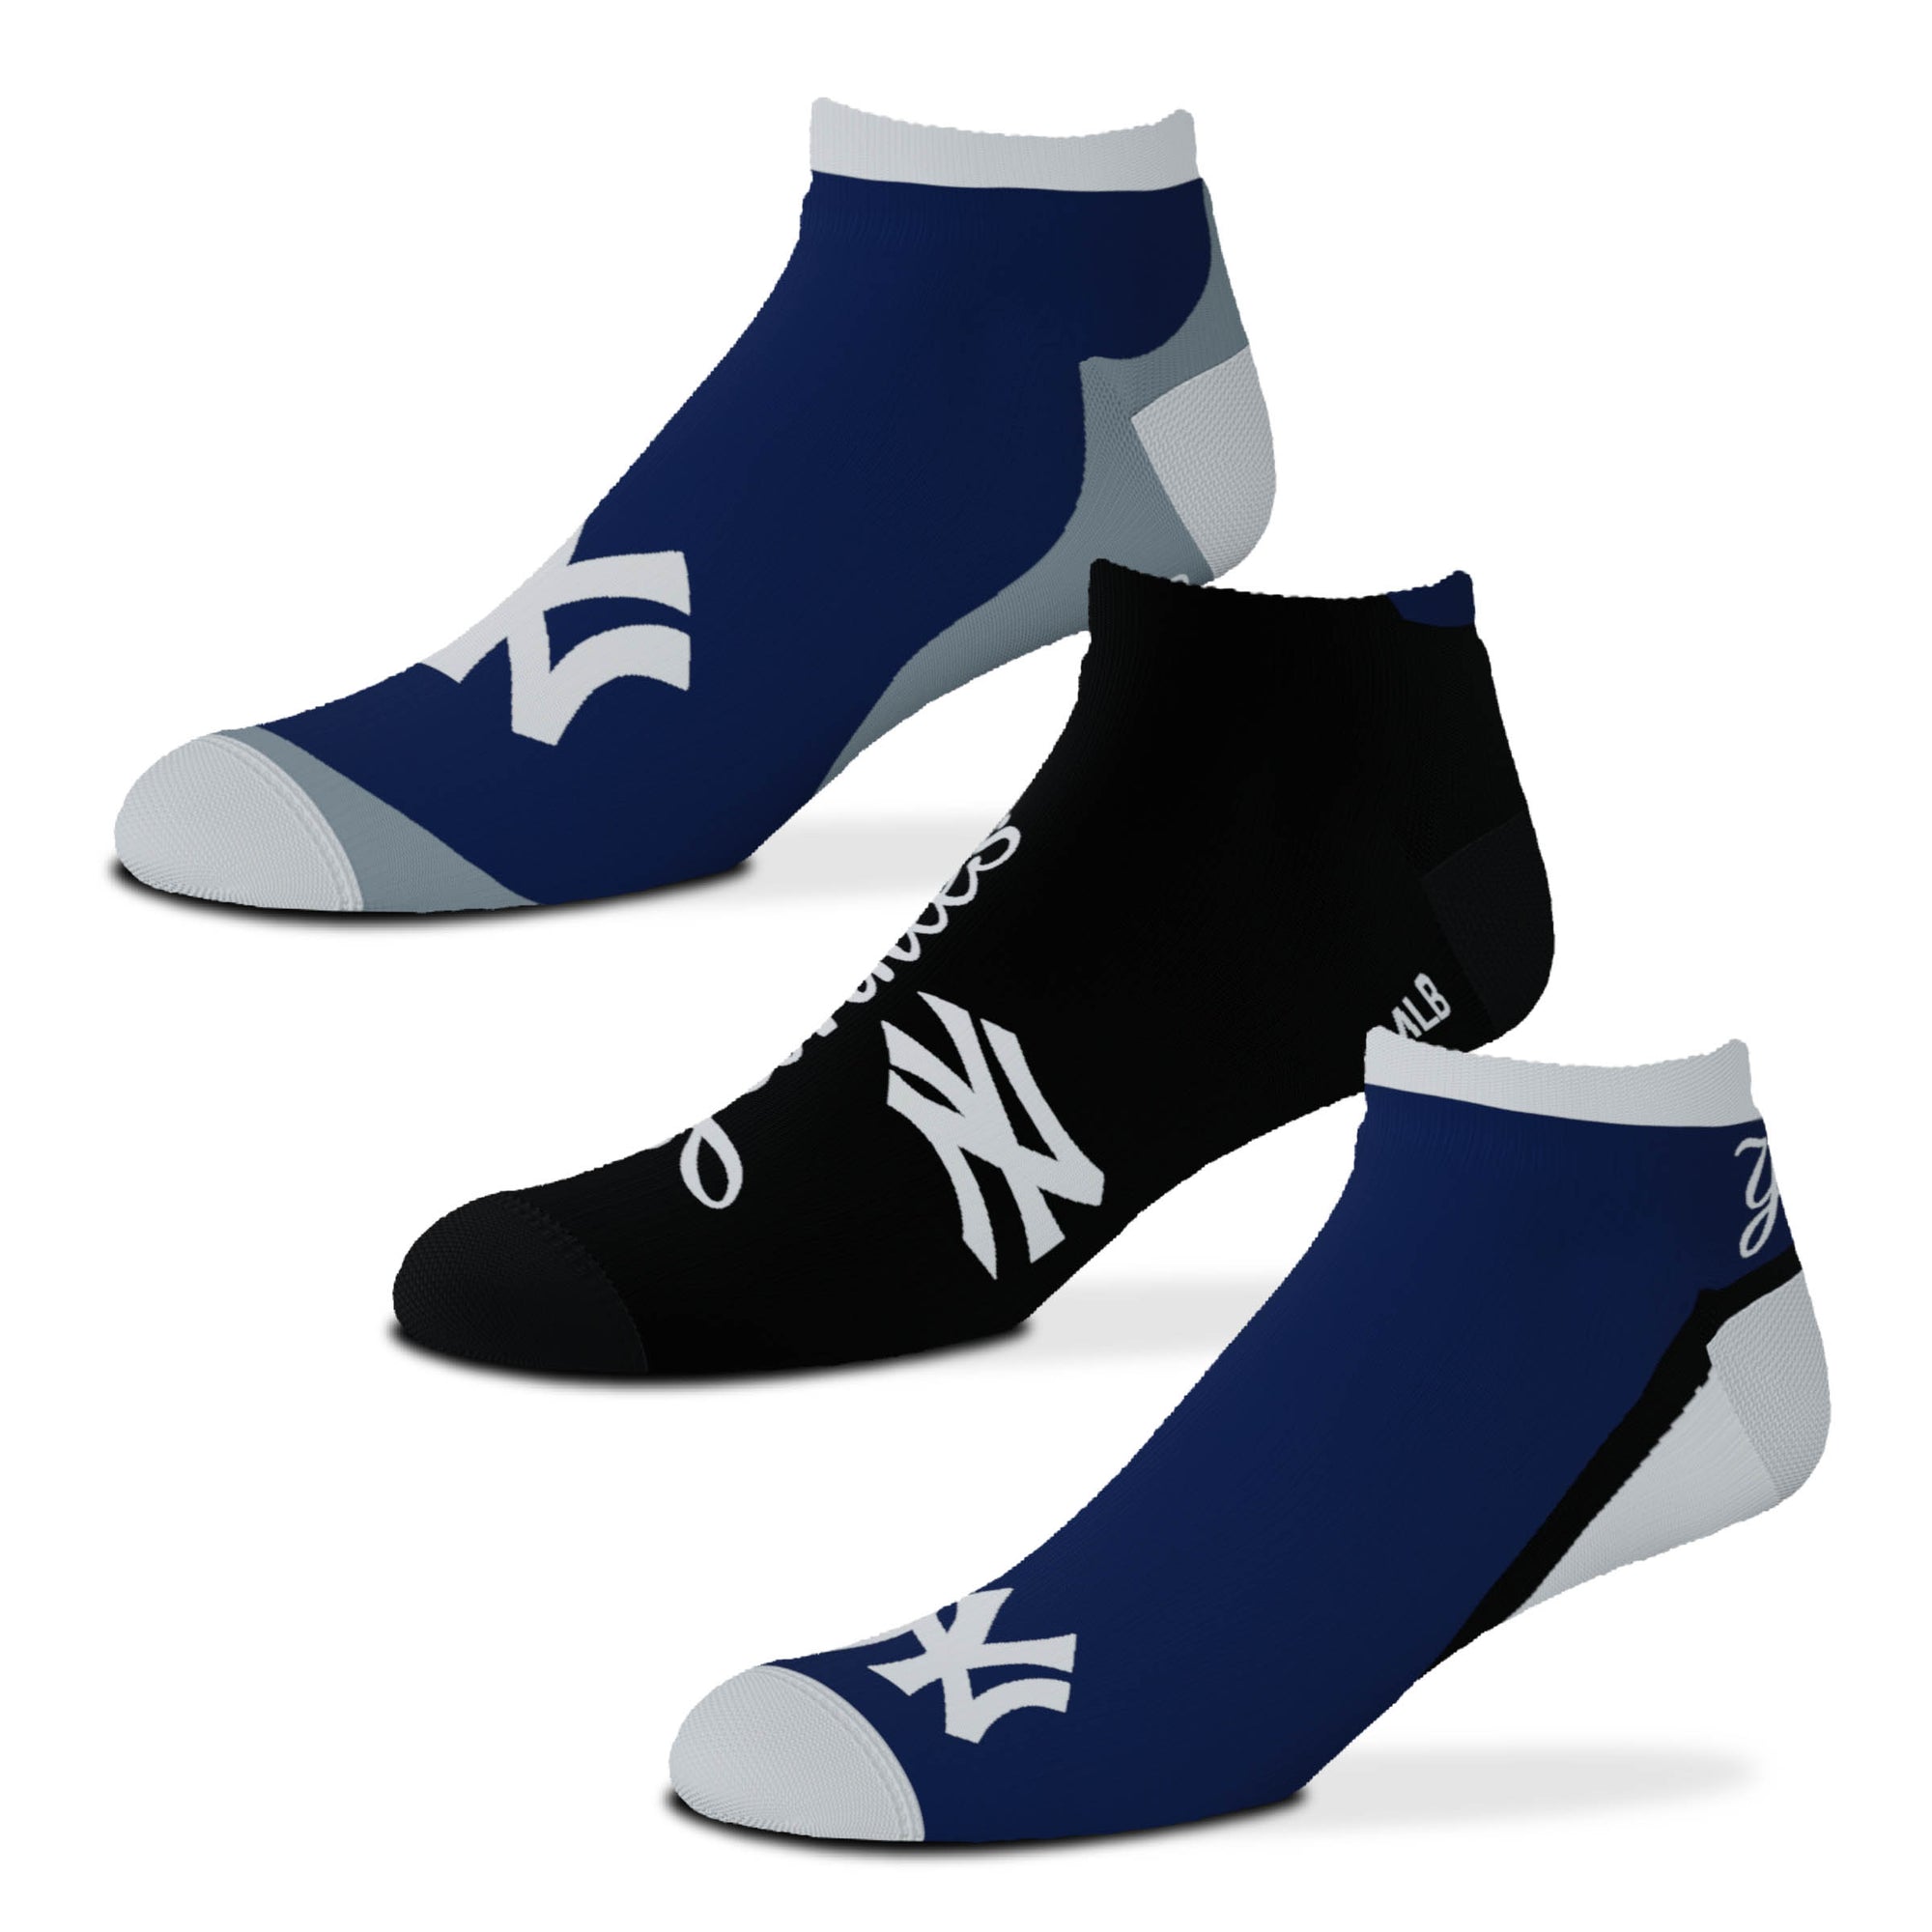 Officially Licensed MLB Compression Socks